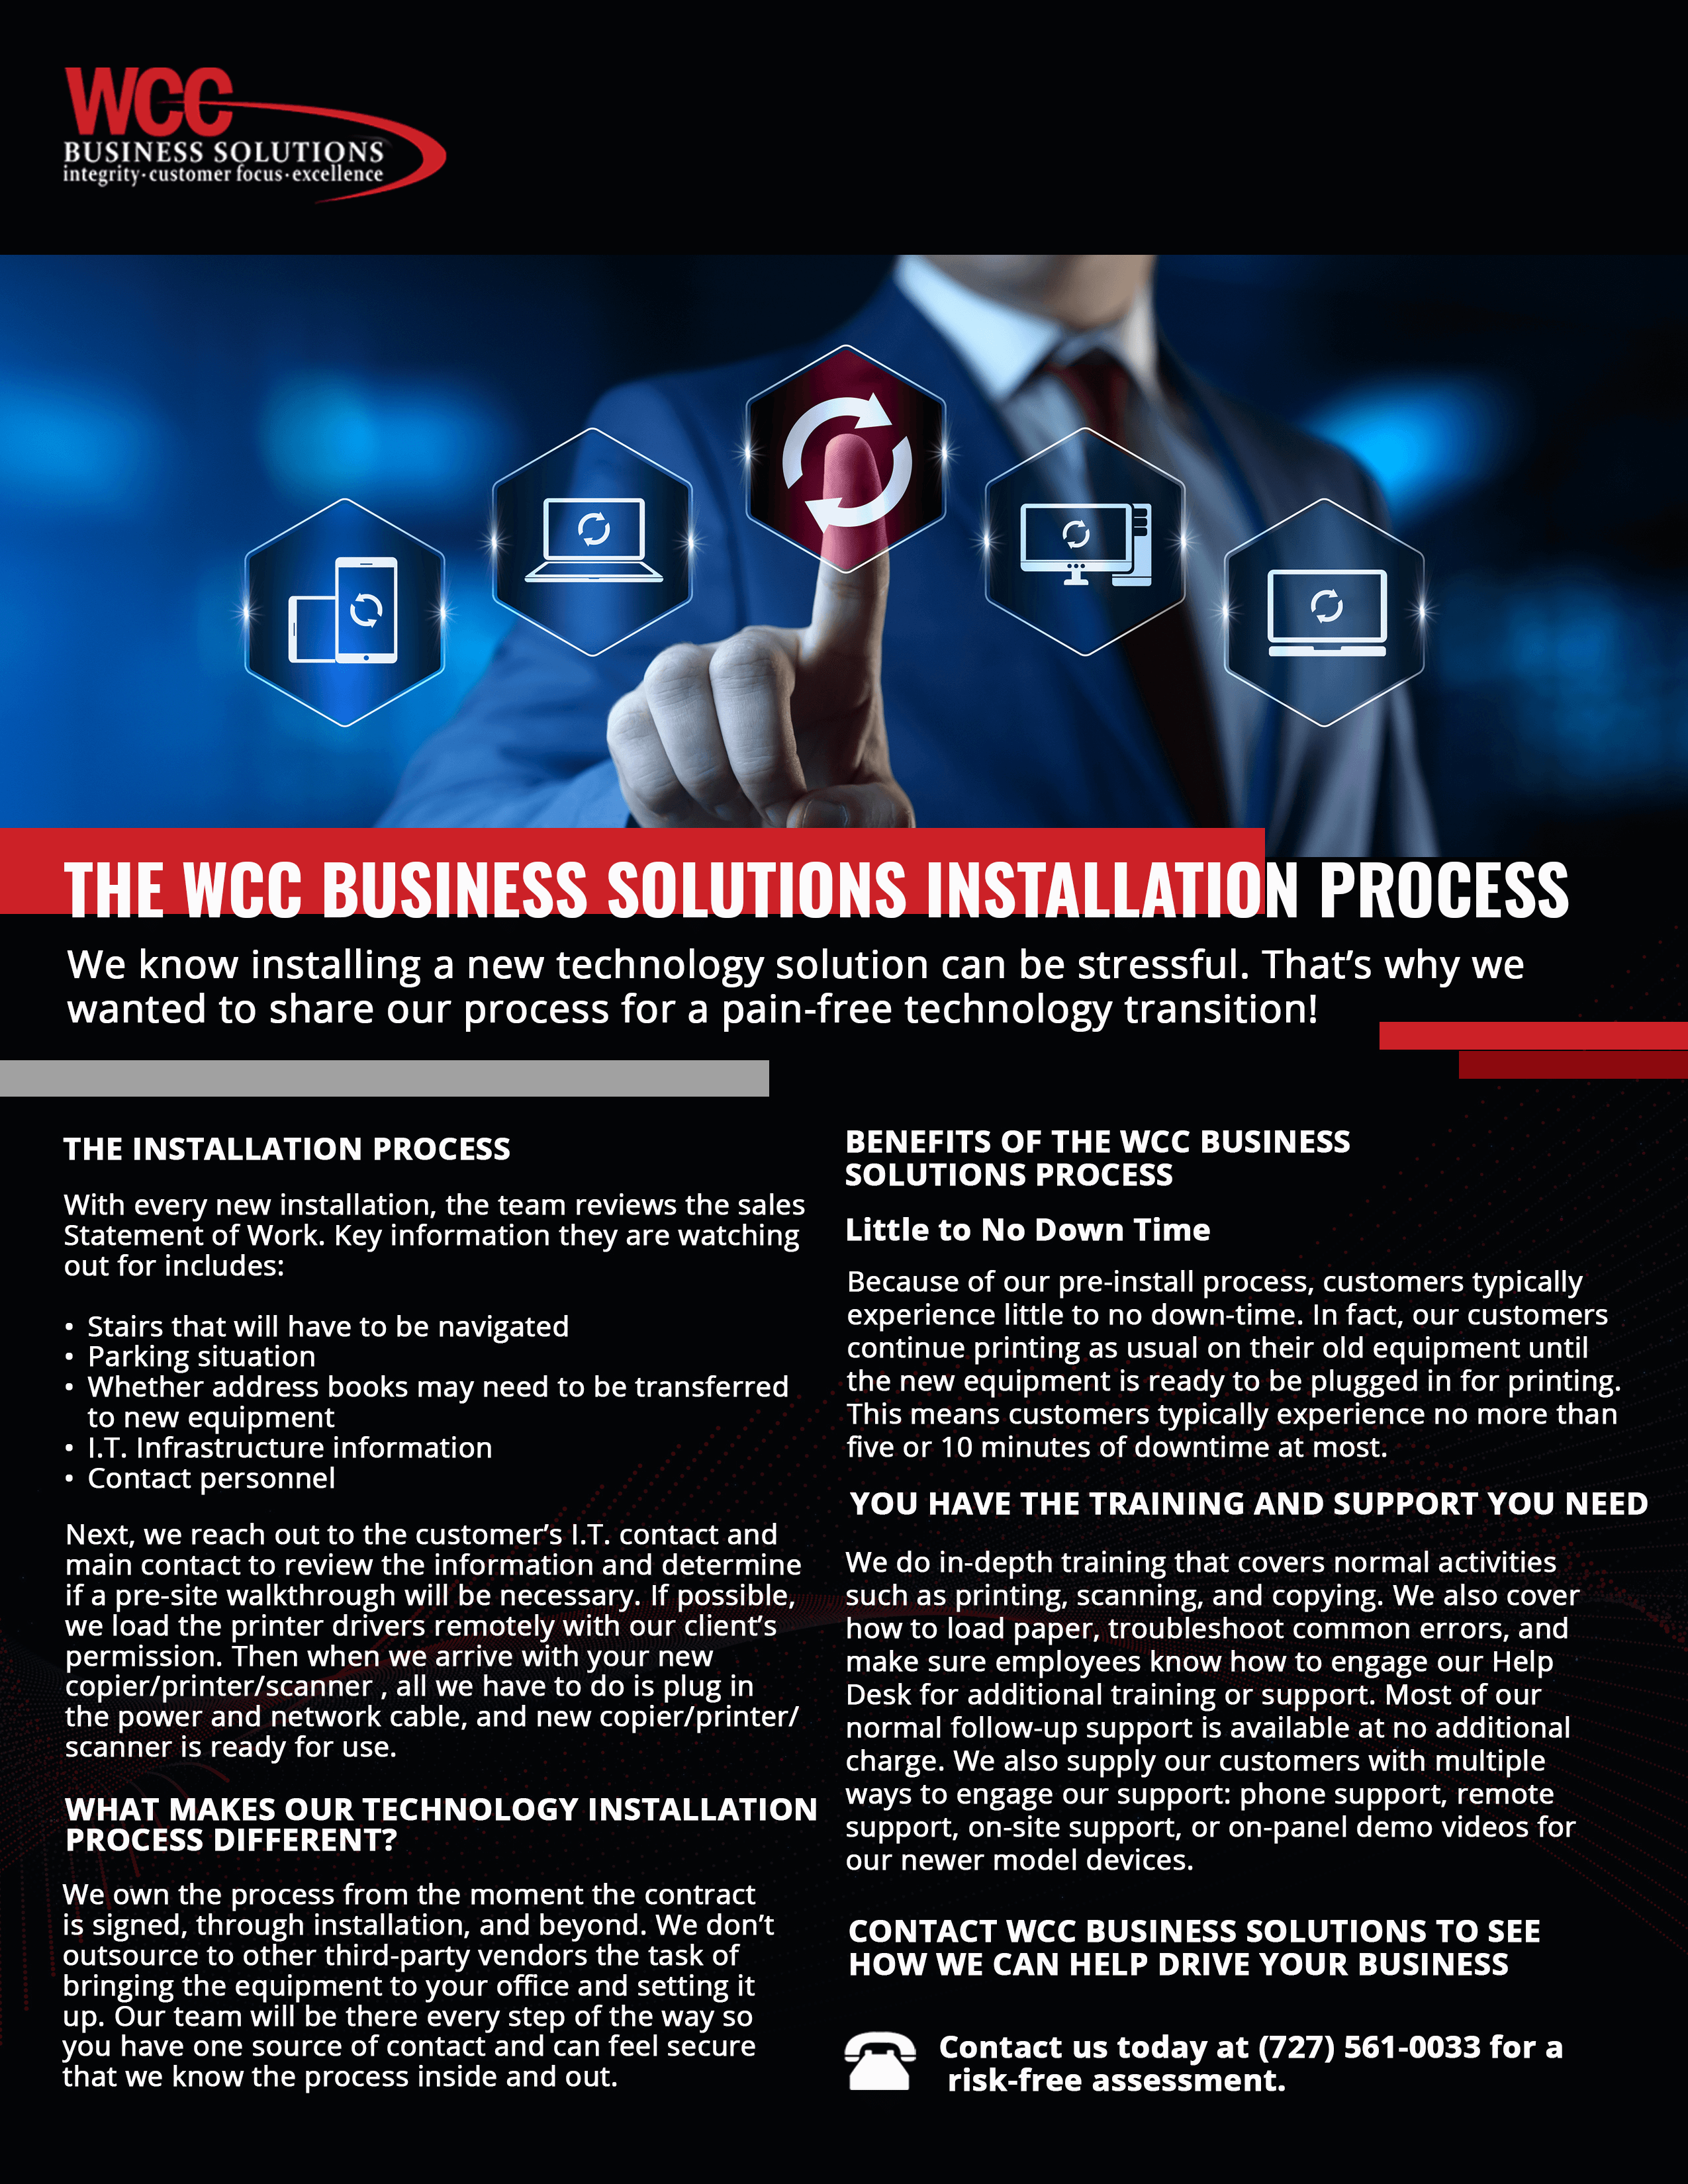 https://wccbs.com/wp-content/uploads/2019/08/WCC-Installation-Process-Marketing-Piece-8.21.19.png